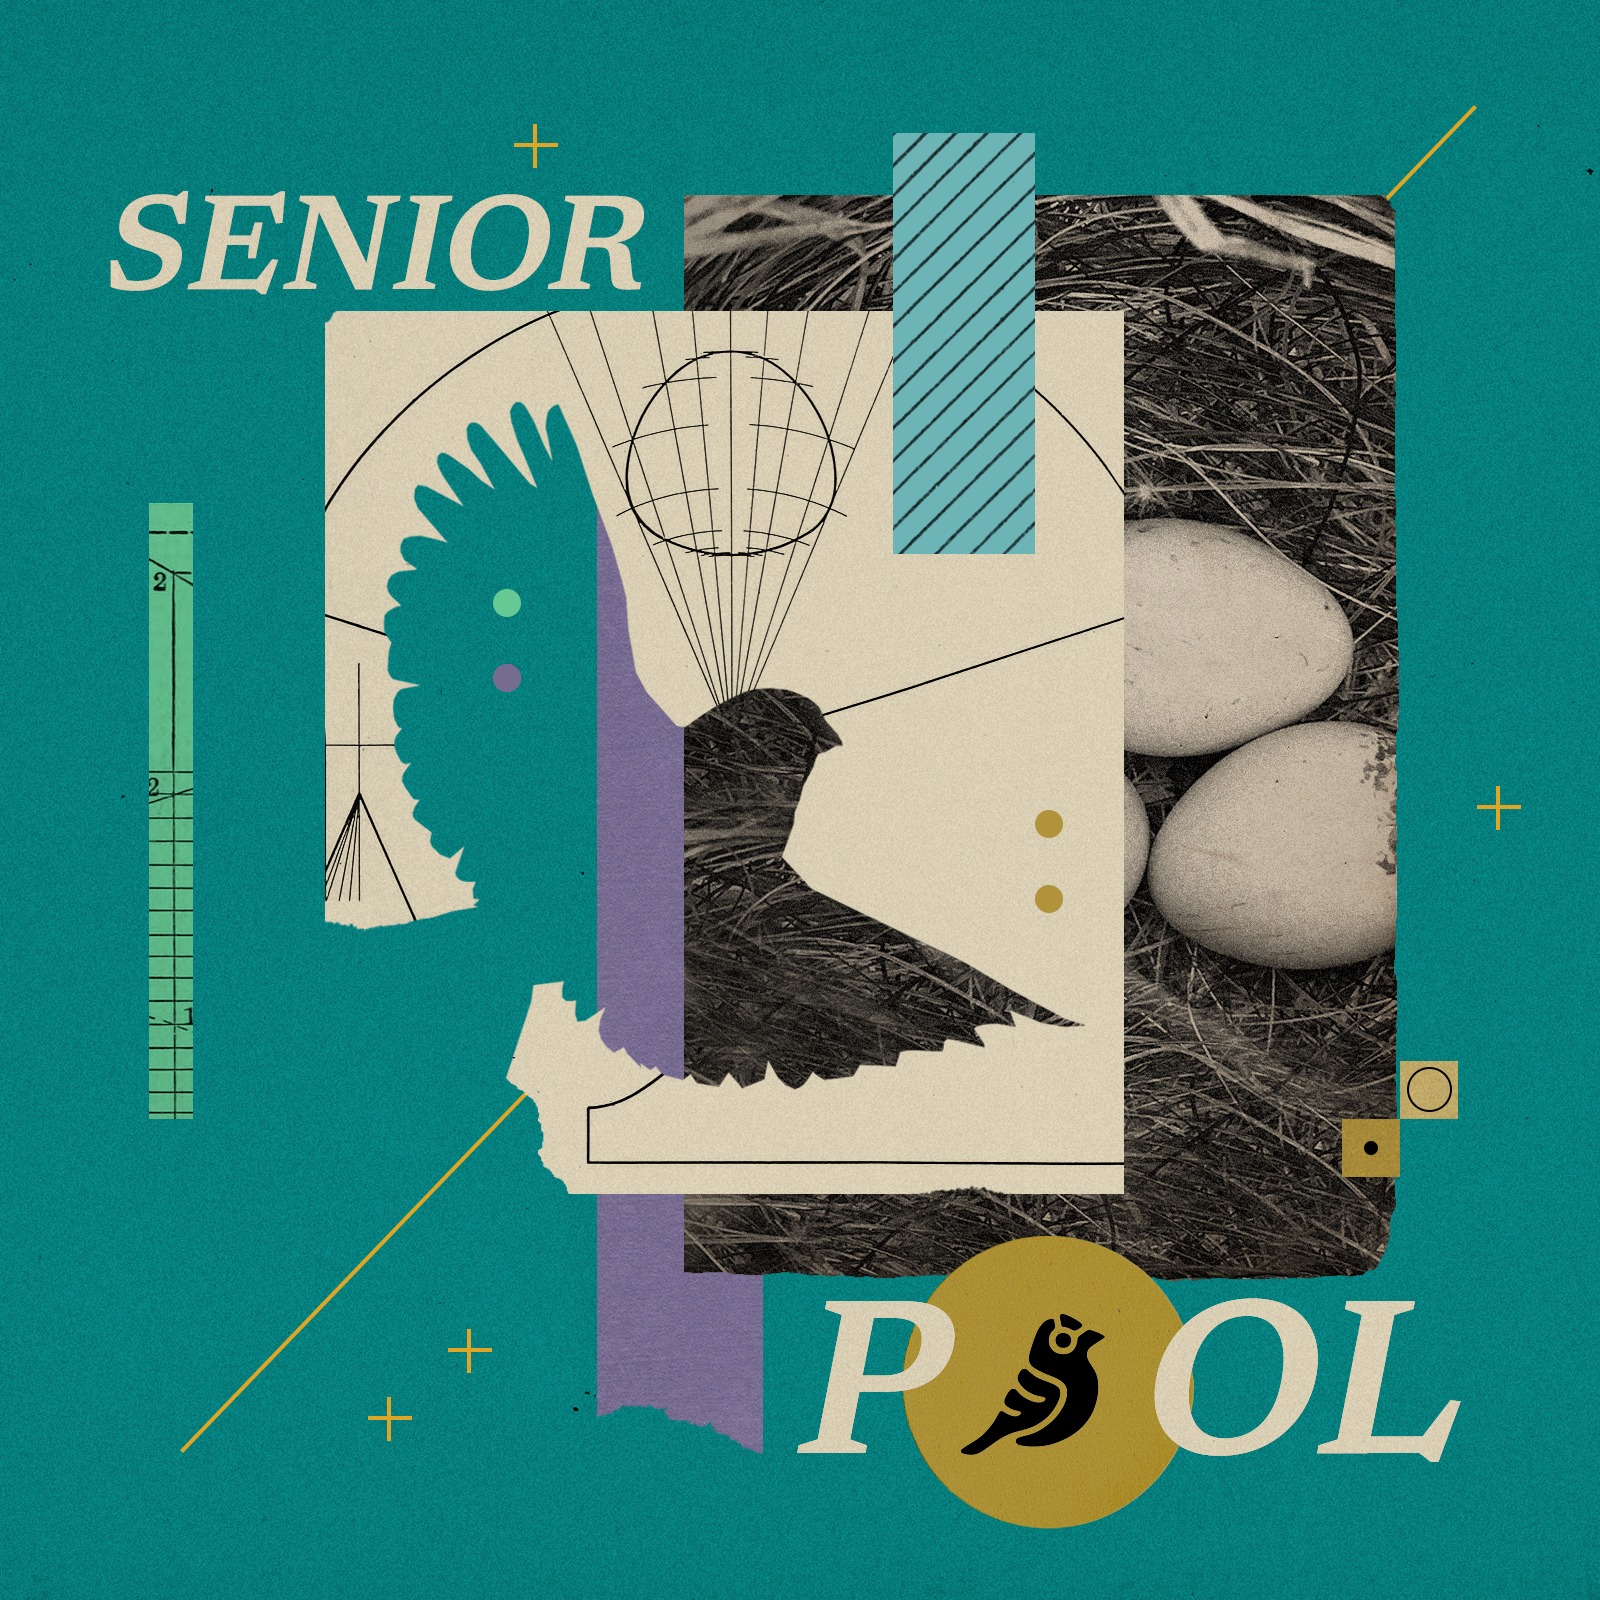 How the Senior Pool works